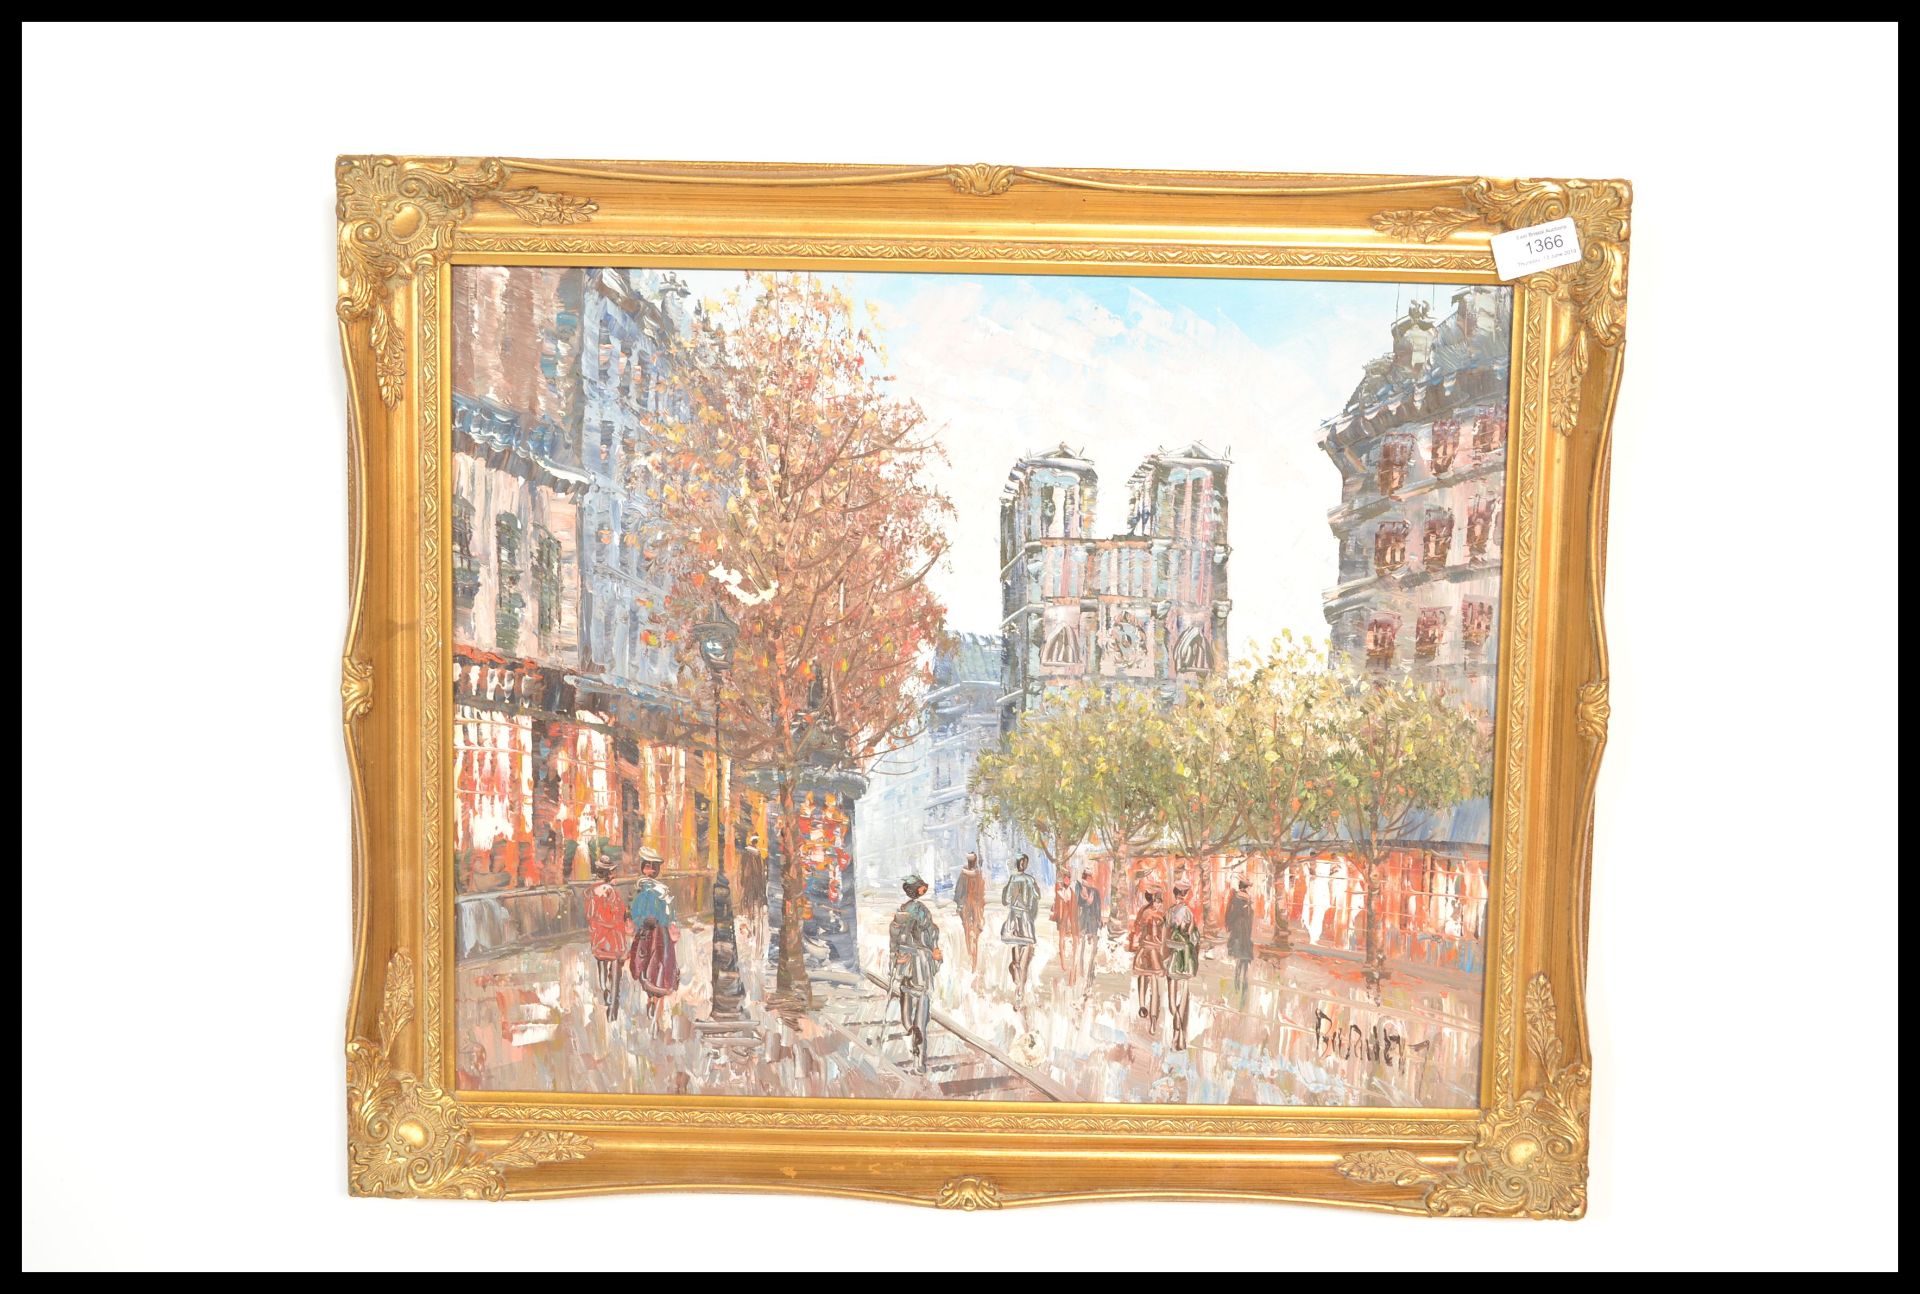 Burnett - A 20th Century oil on canvas painting depicting an Edwardian Parisian street scene, set